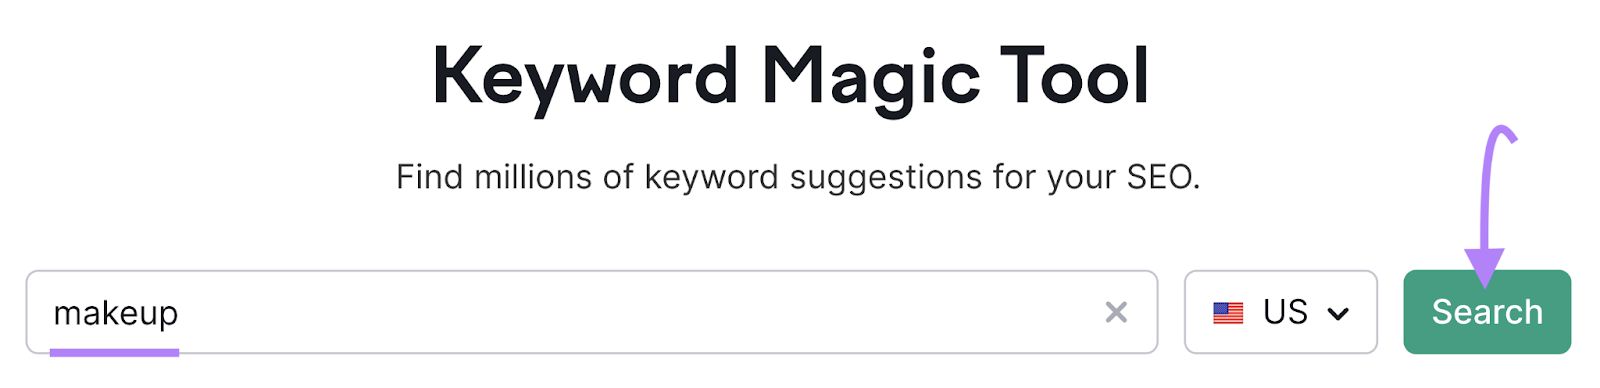 "makeup" entered into the Keyword Magic Tool search bar